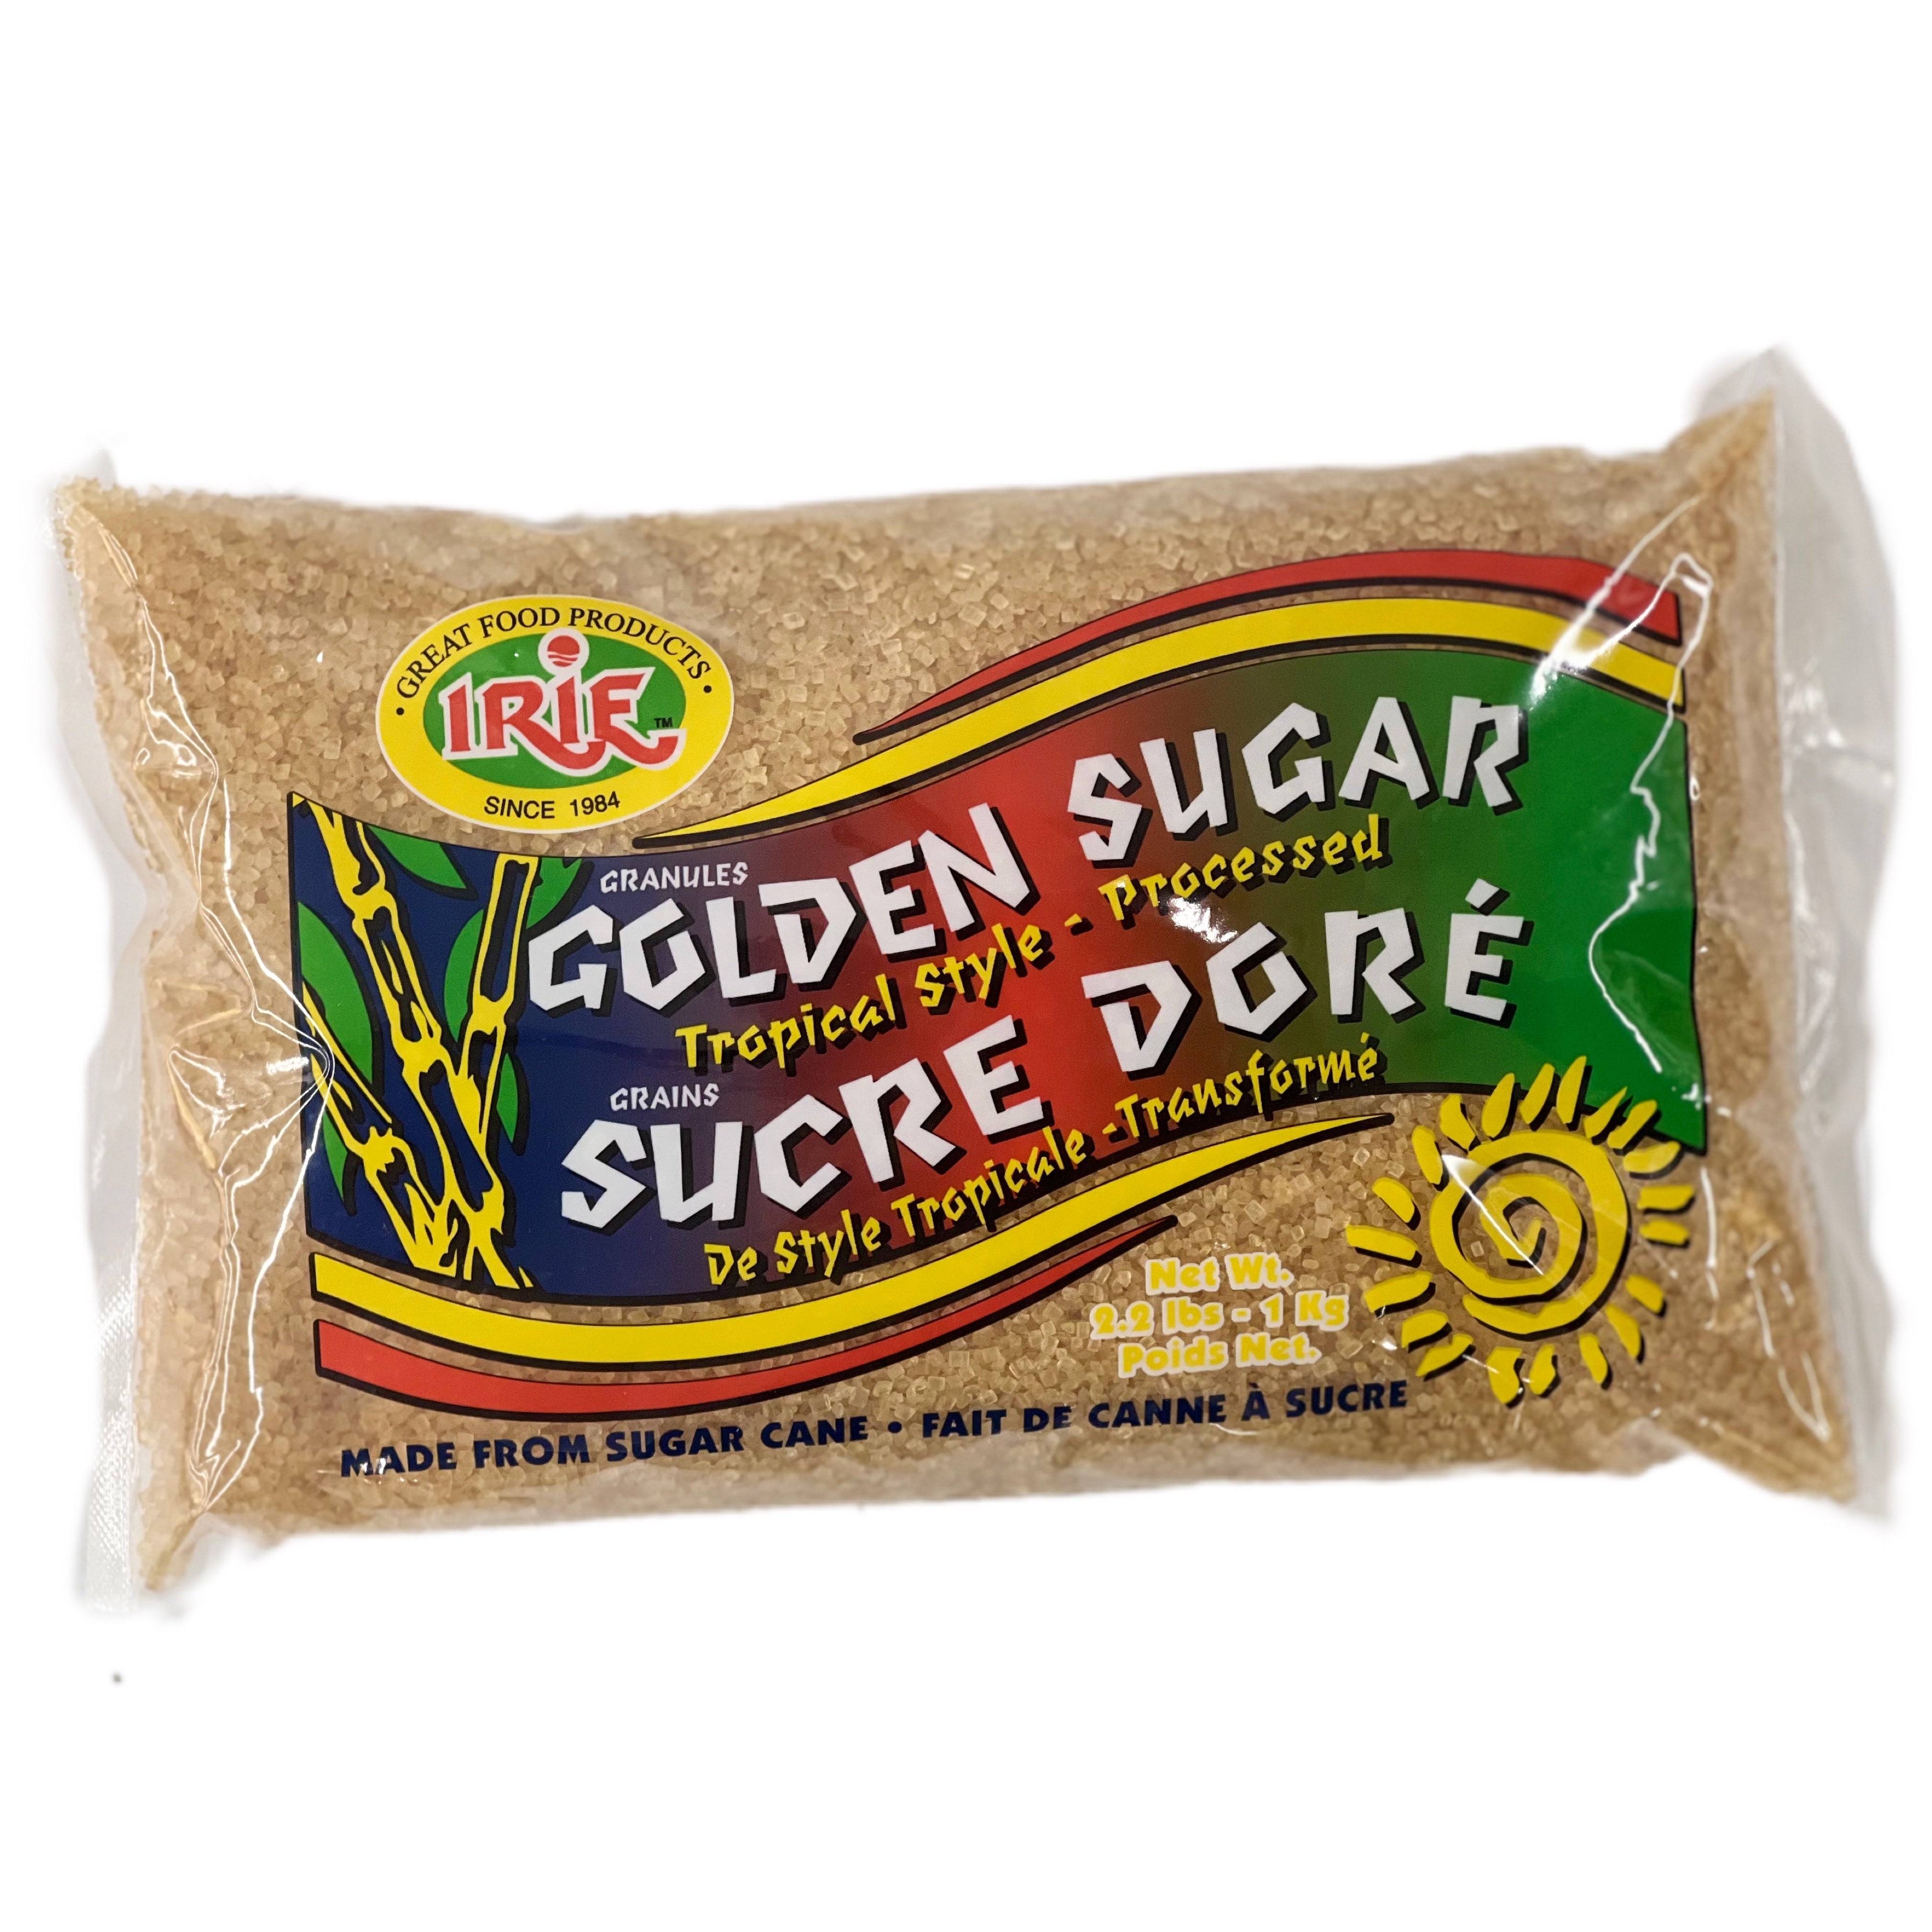 Irie Golden Sugar Tropical Style 2.2Lbs